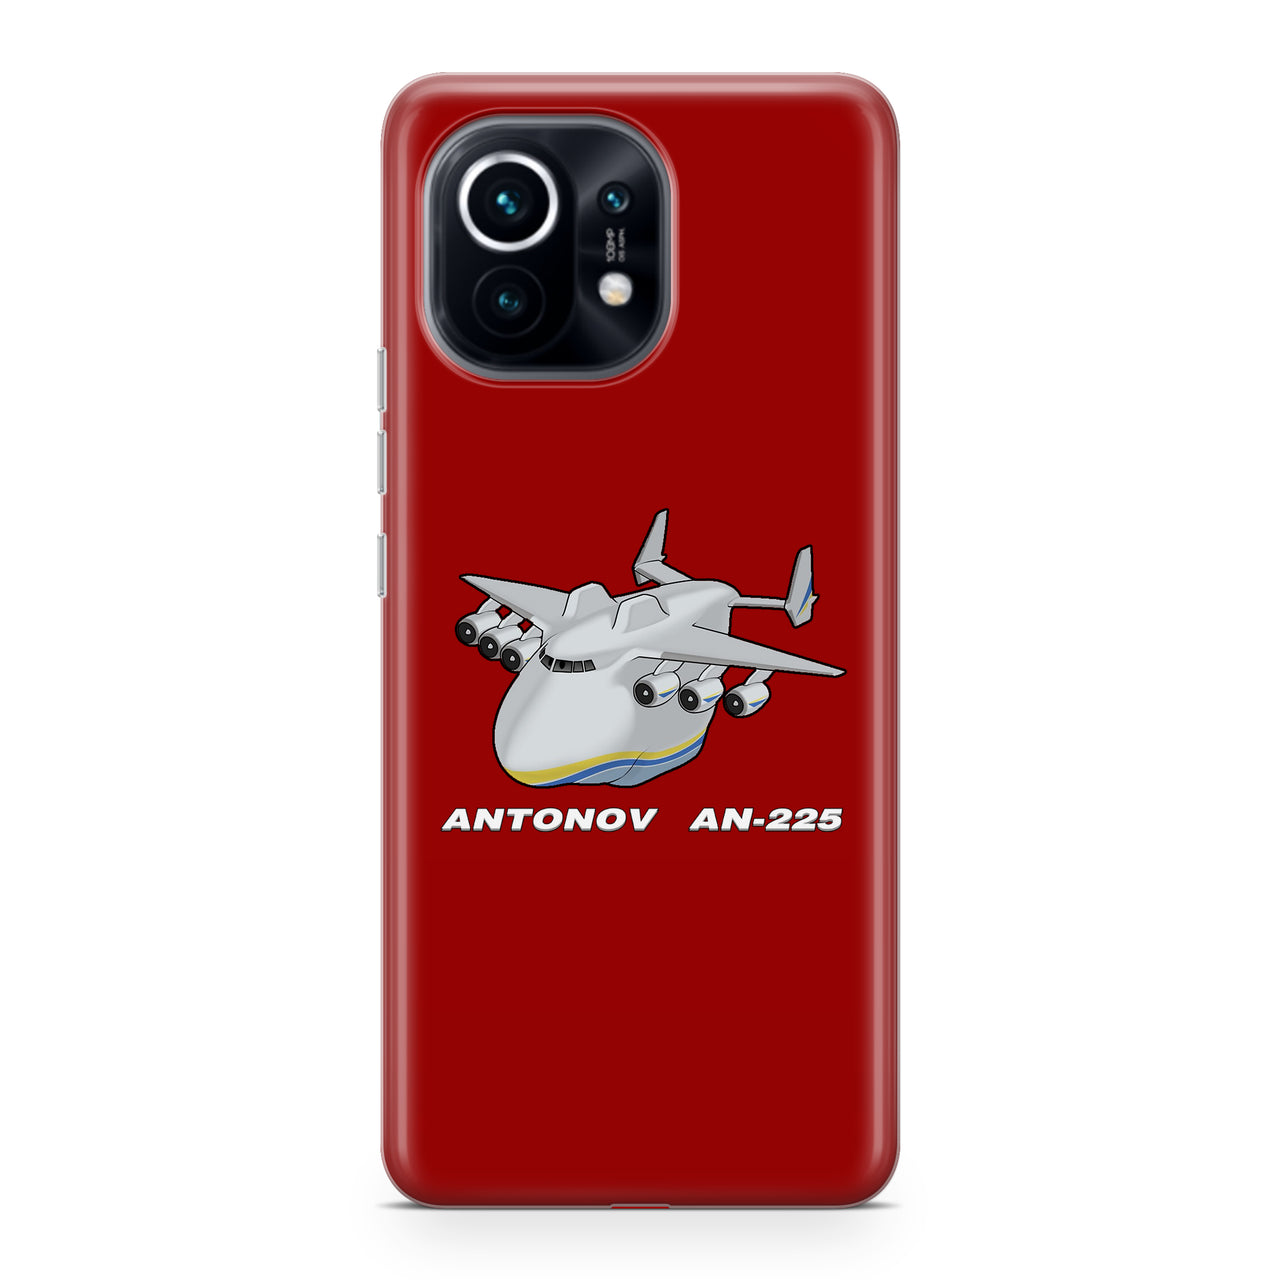 Antonov AN-225 (29) Designed Xiaomi Cases